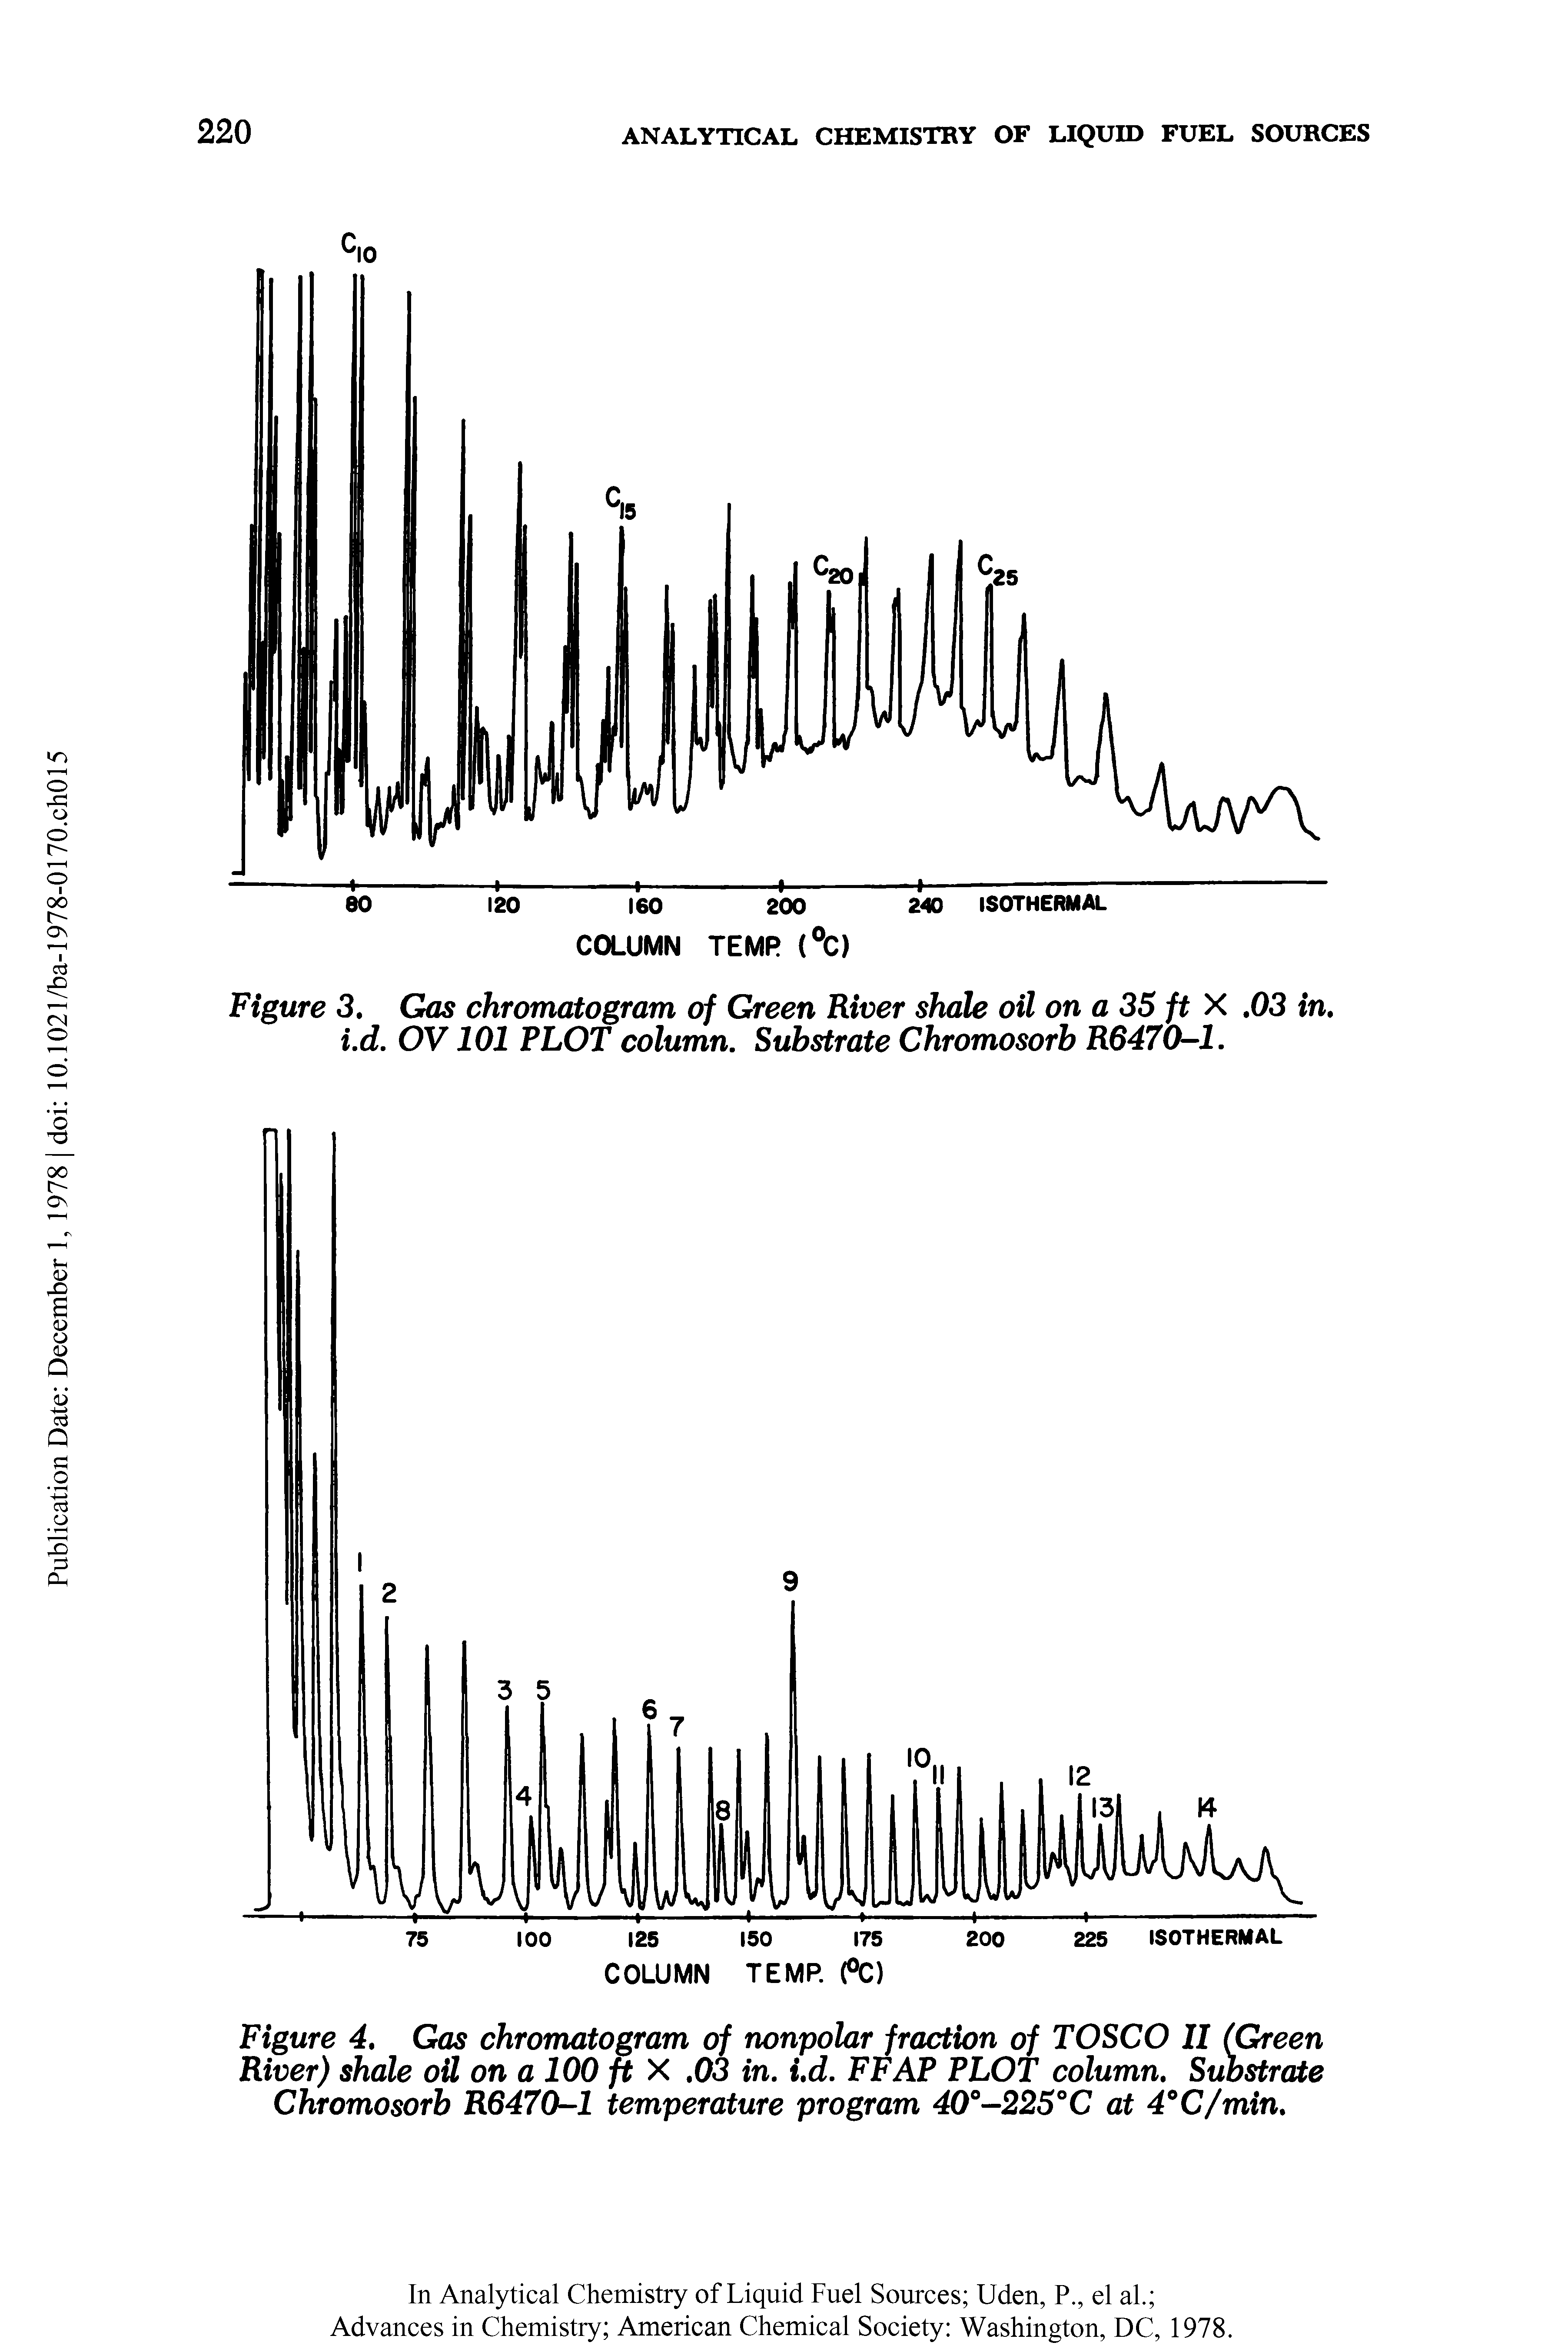 Figure 4, Gas chromatogram of nonpolar fraction of TOSCO 11 (Green River) shale oil on a 100 X, 03 in. i,d. FFAP PLOT column. Substrate Chromosorb R6470-1 temperature program 40°-225°C at 4" C/min,...